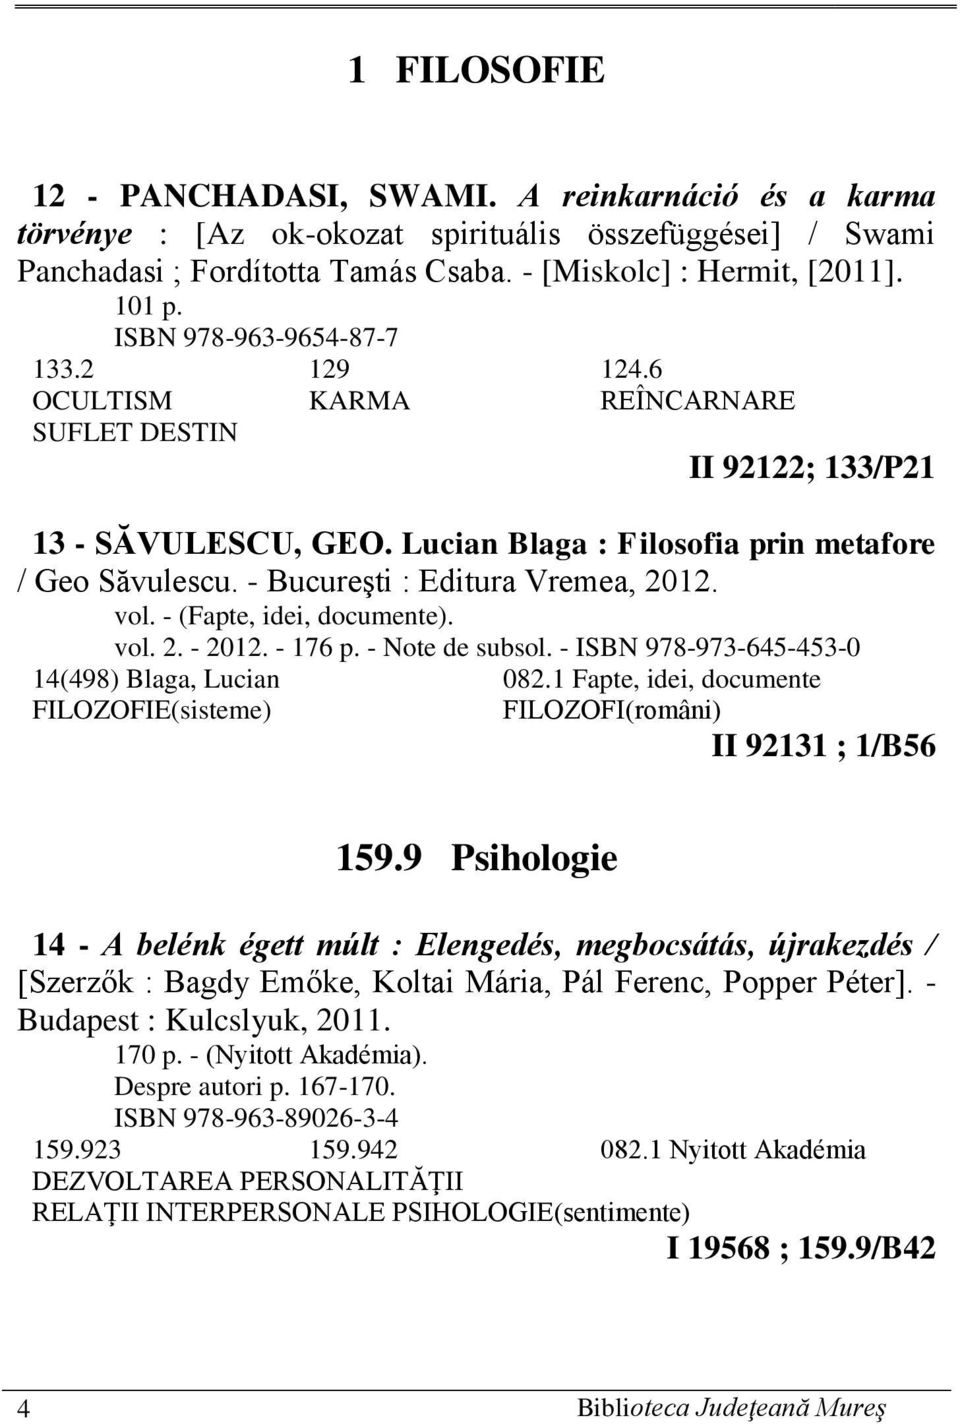 - Bucureşti : Editura Vremea, 2012. vol. - (Fapte, idei, documente). vol. 2. - 2012. - 176 p. - Note de subsol. - ISBN 978-973-645-453-0 14(498) Blaga, Lucian 082.